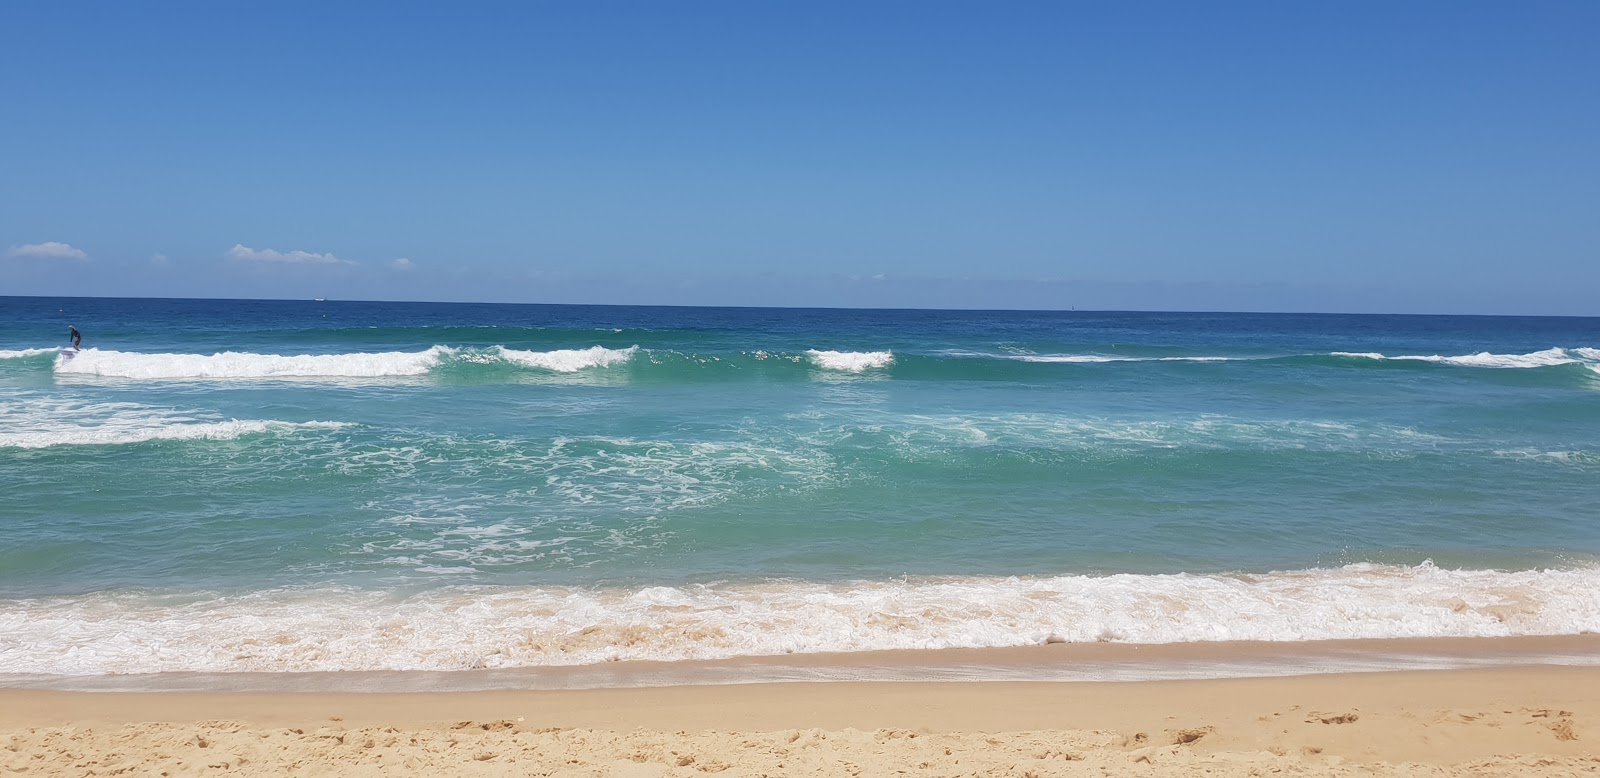 Foto de Kawana Beach - lugar popular entre os apreciadores de relaxamento